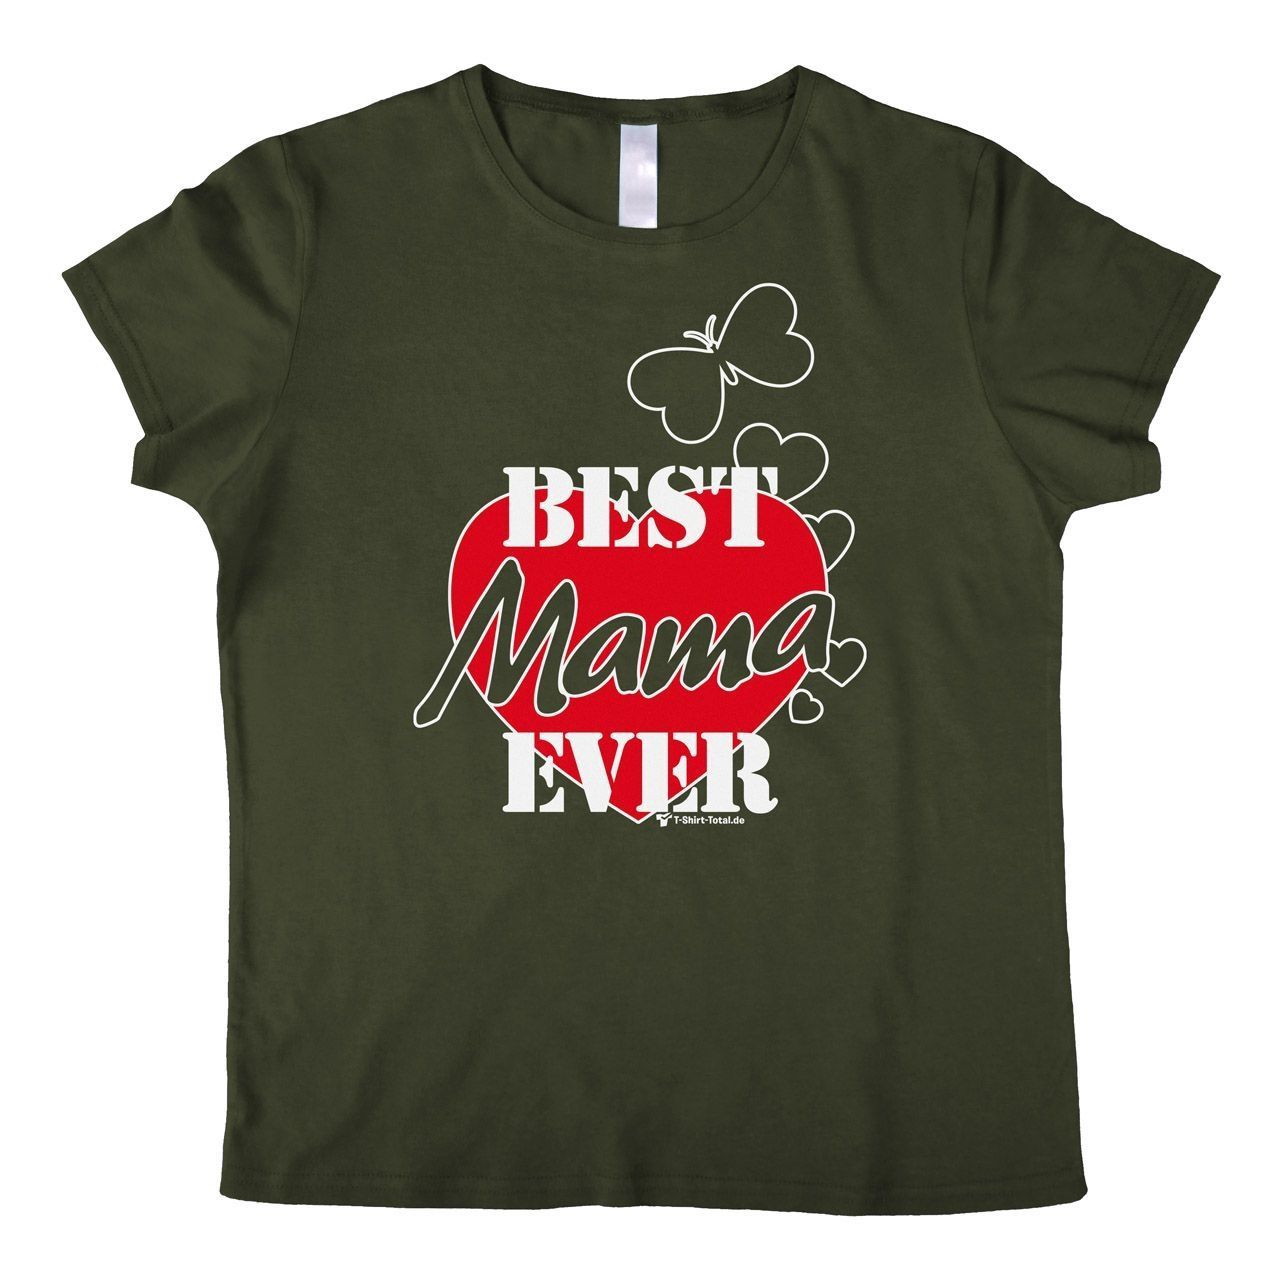 Best Mama ever Woman T-Shirt khaki Extra Large